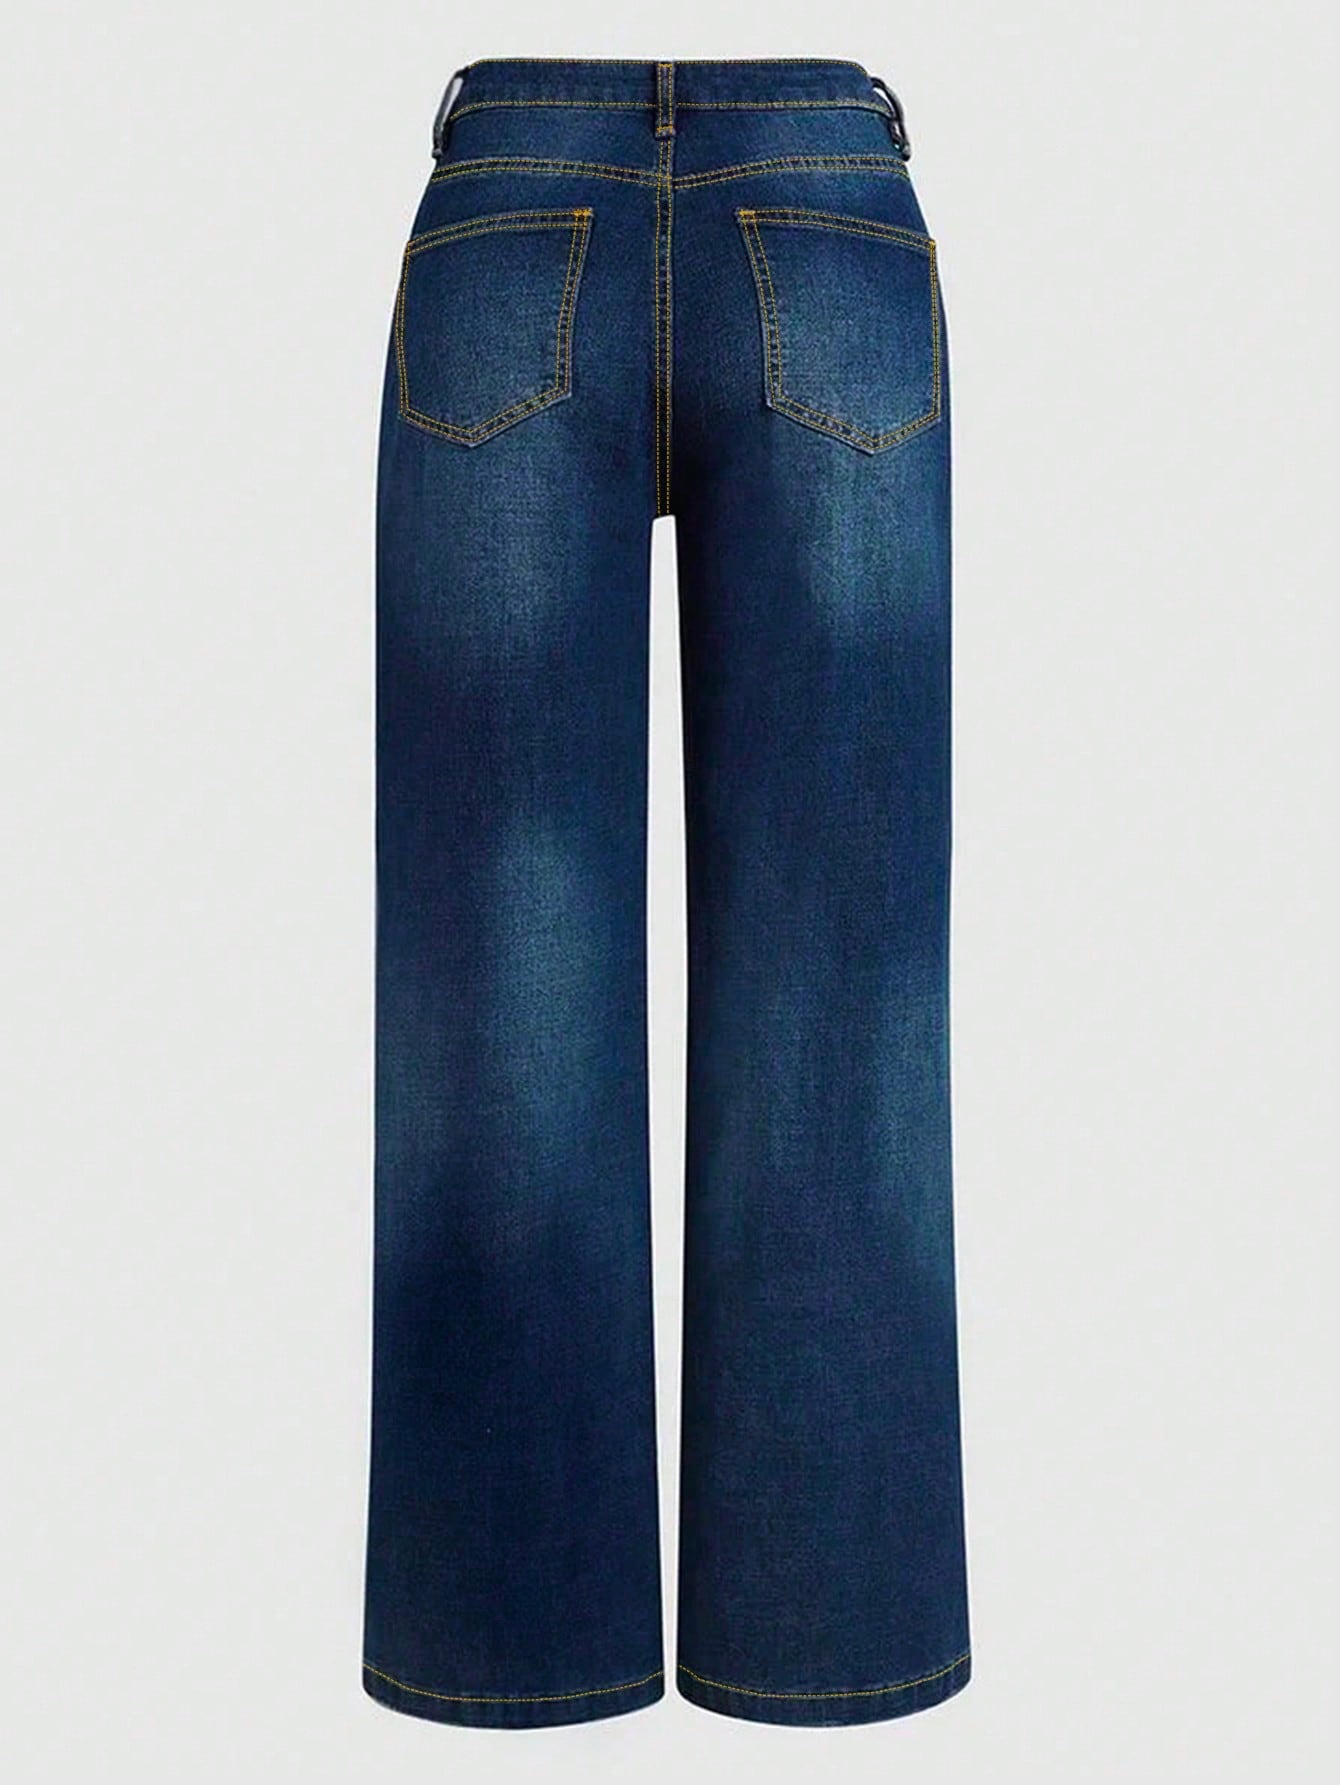 Classic Loose-Fit Straight Leg Denim Jeans - Timeless Women’s Fashion Staple-Free Shipping